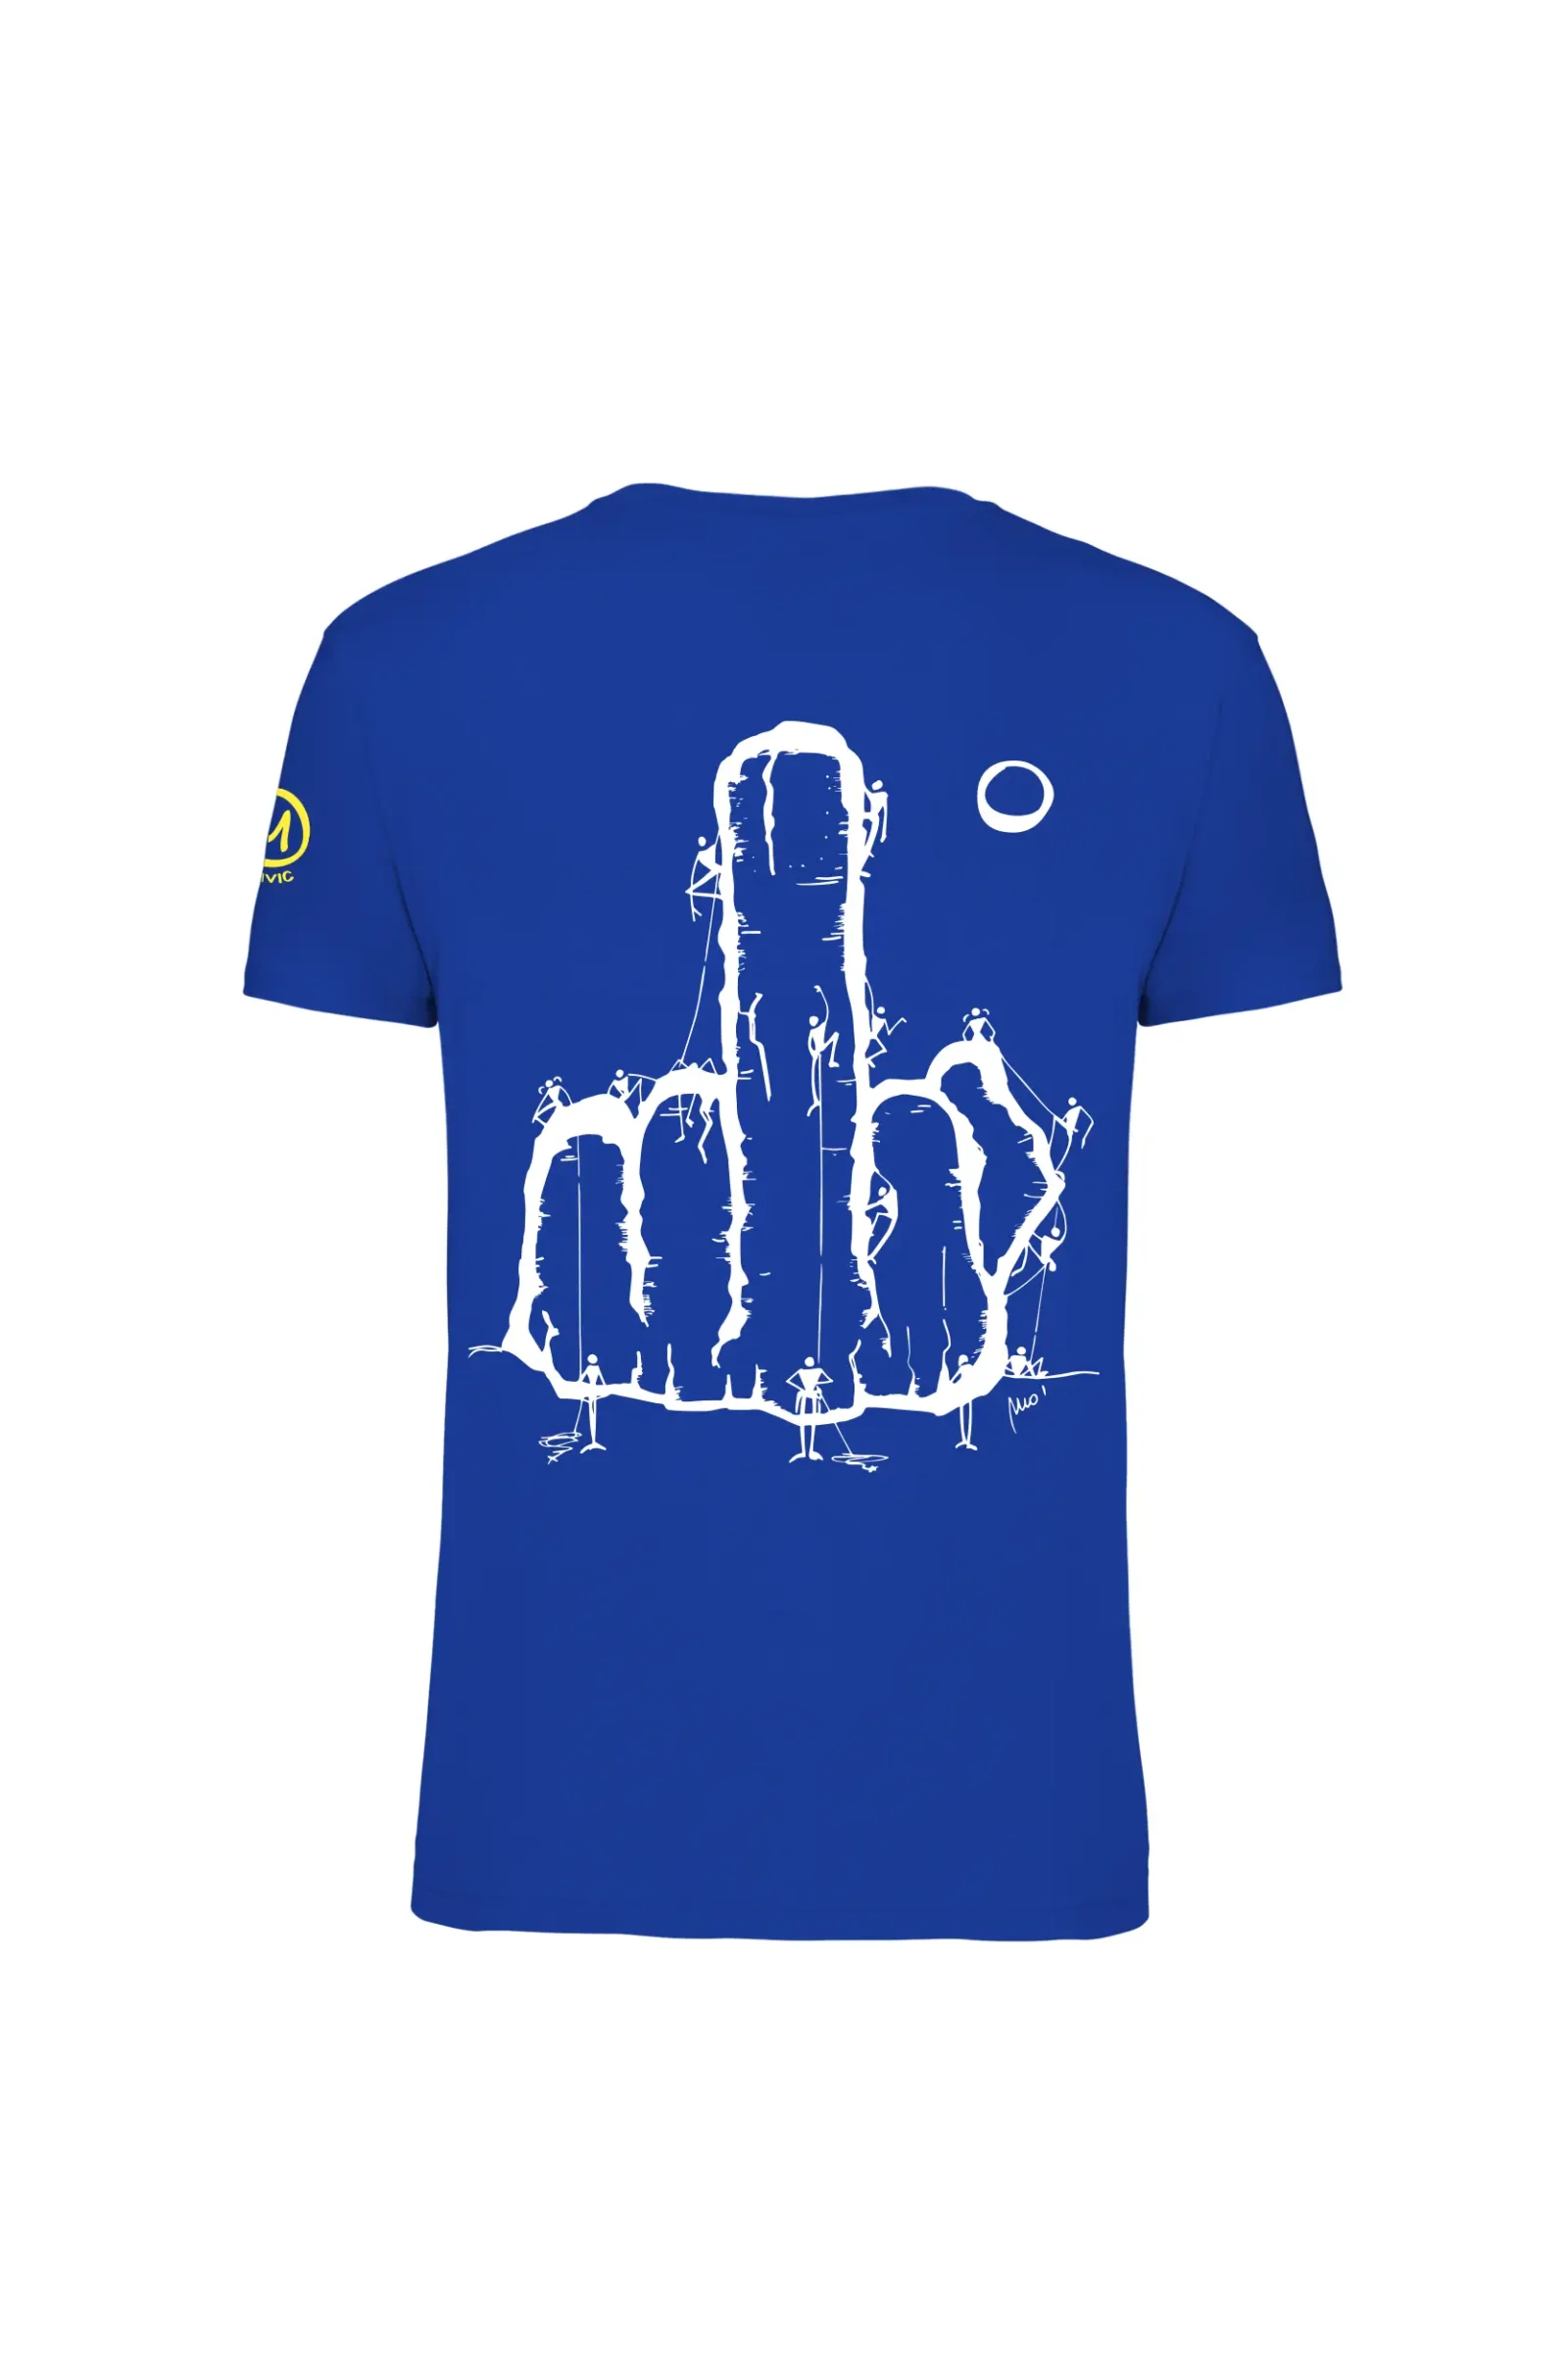 Men's climbing t-shirt - royal blue cotton - "Fuck the System" graphics - HASH MONVIC